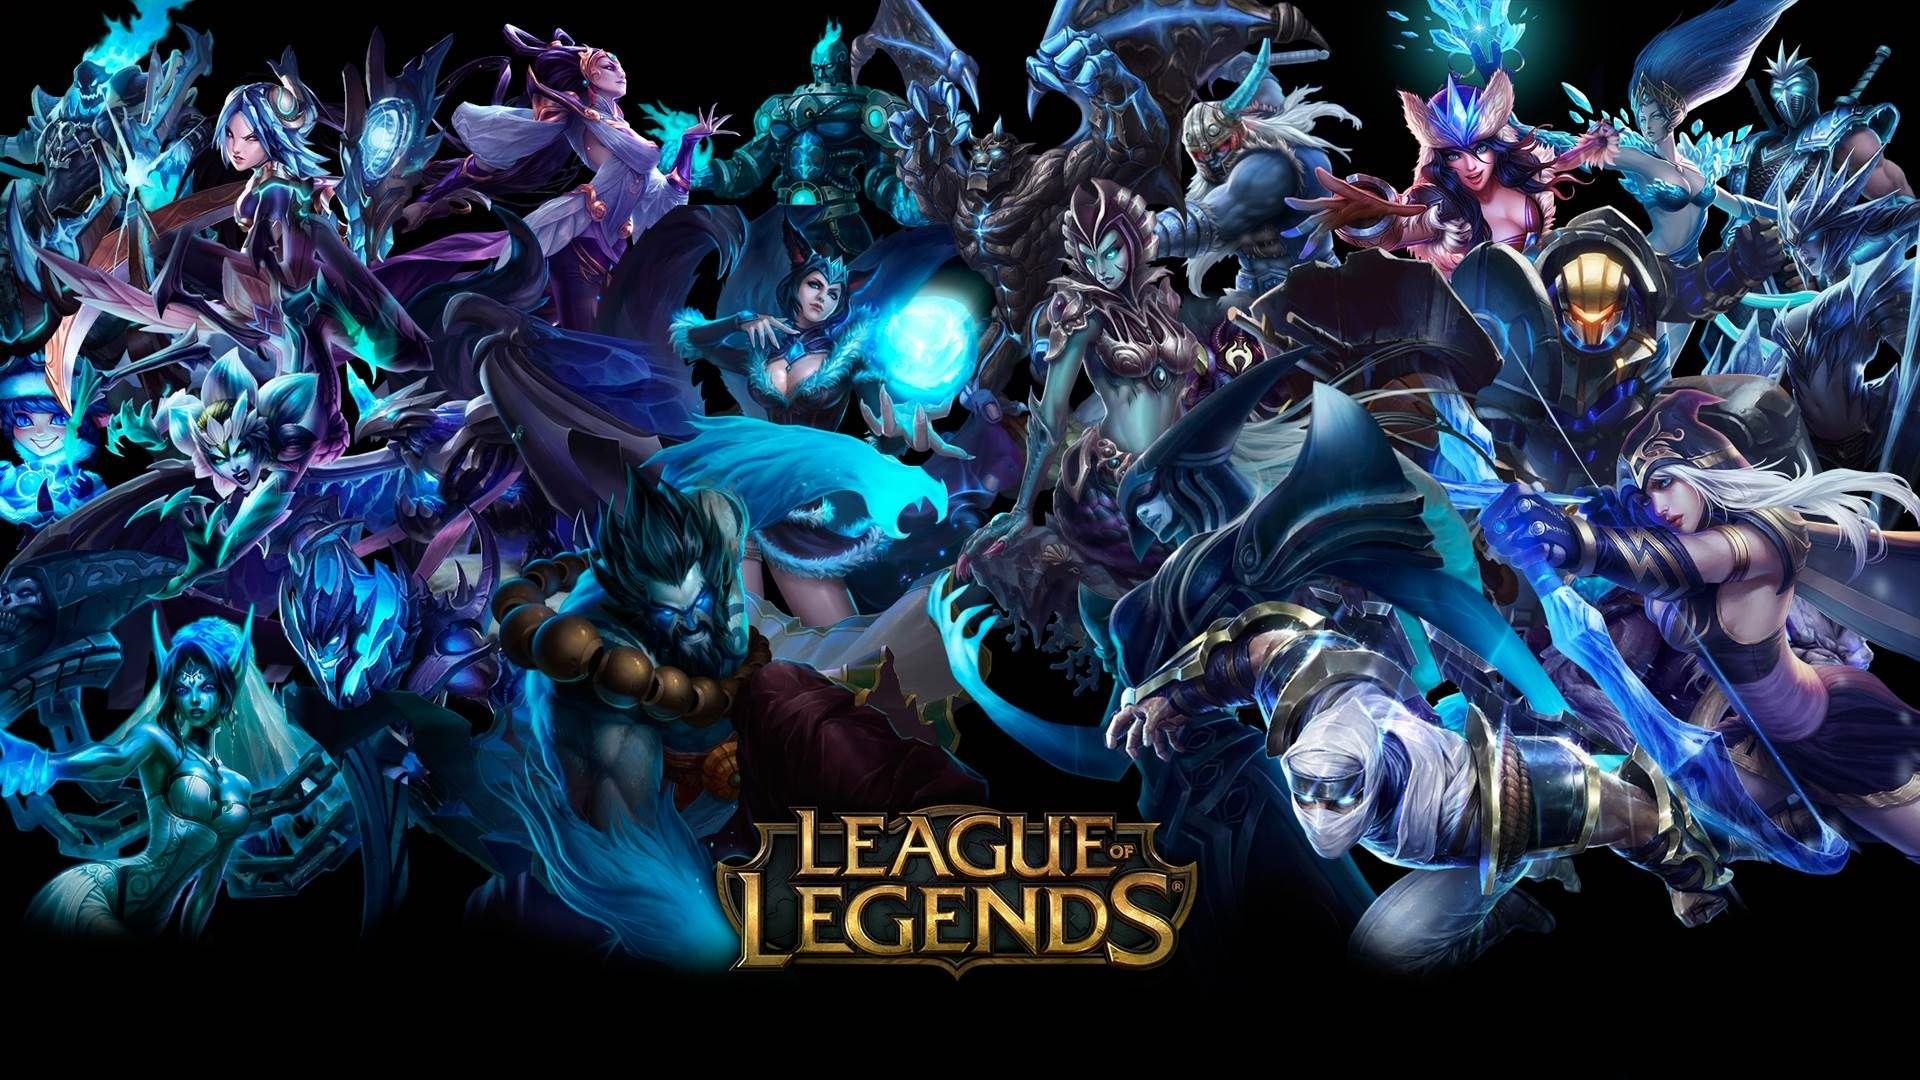 League Of Legends full screen hd wallpaper